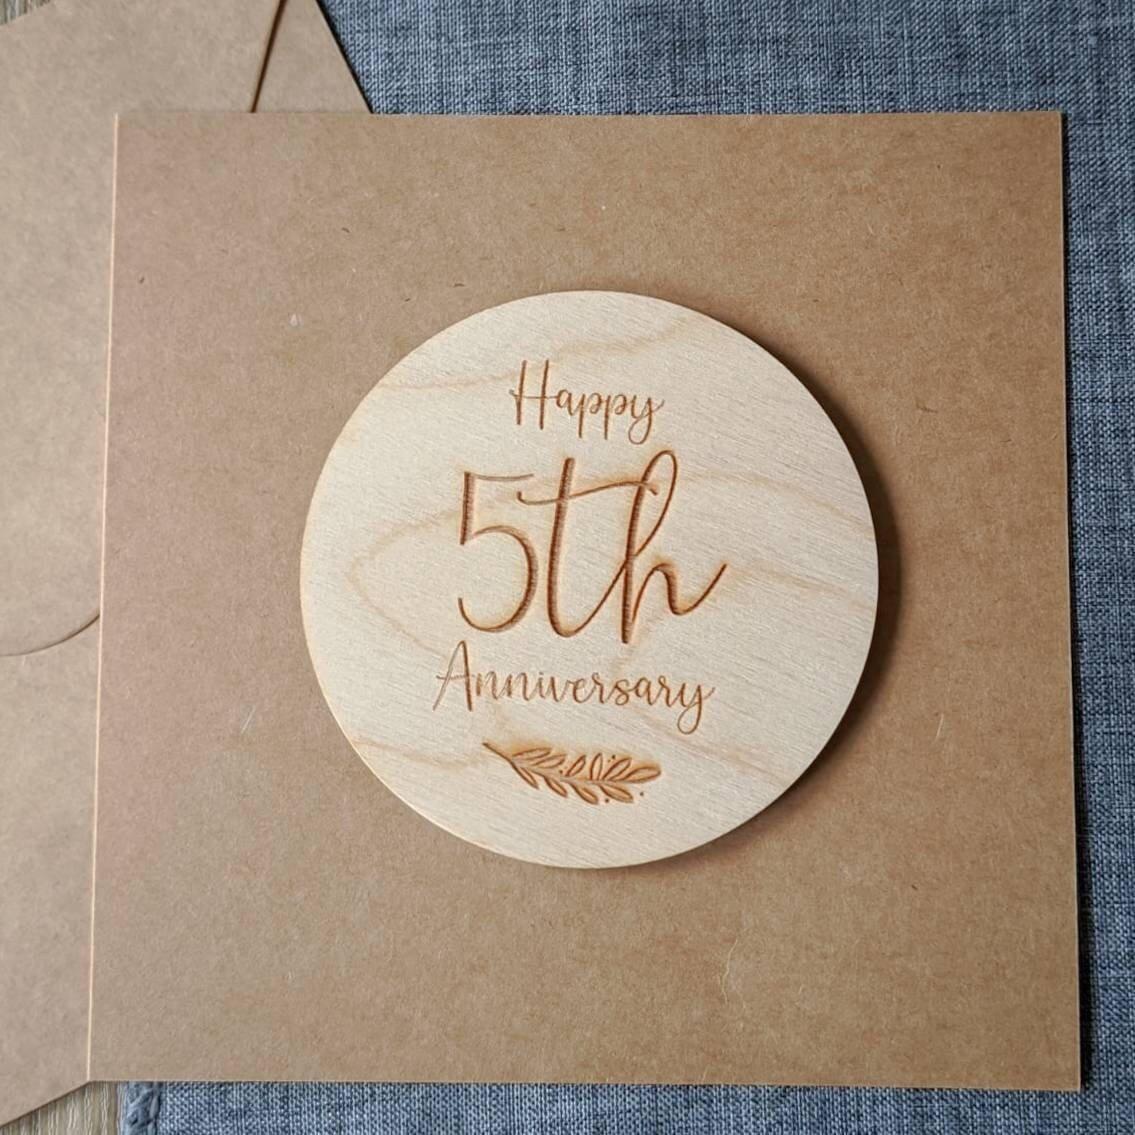 5th Anniversary Card - Wedding Anniversary Card